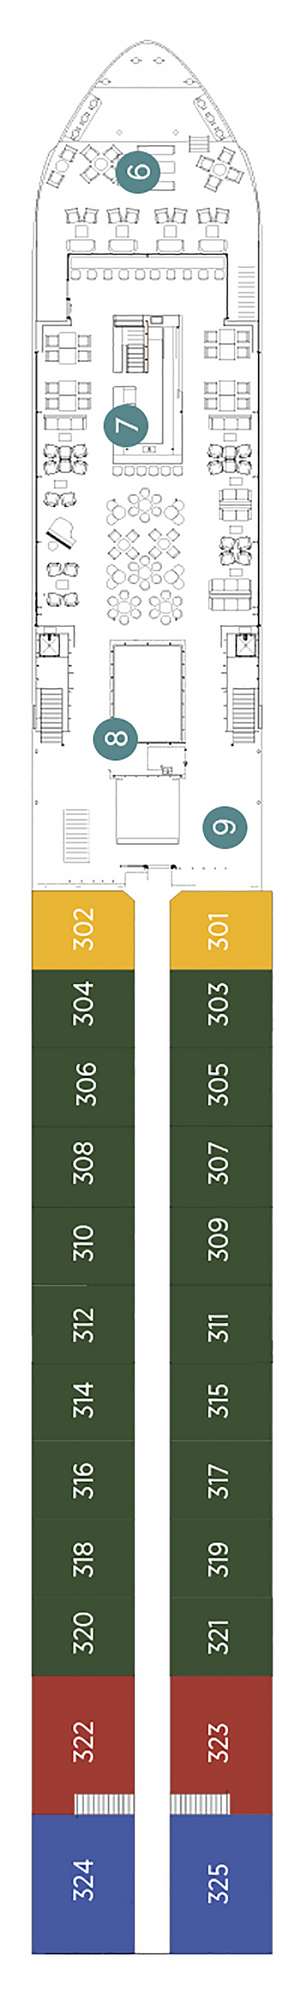 Deck plan for Emerald Radiance